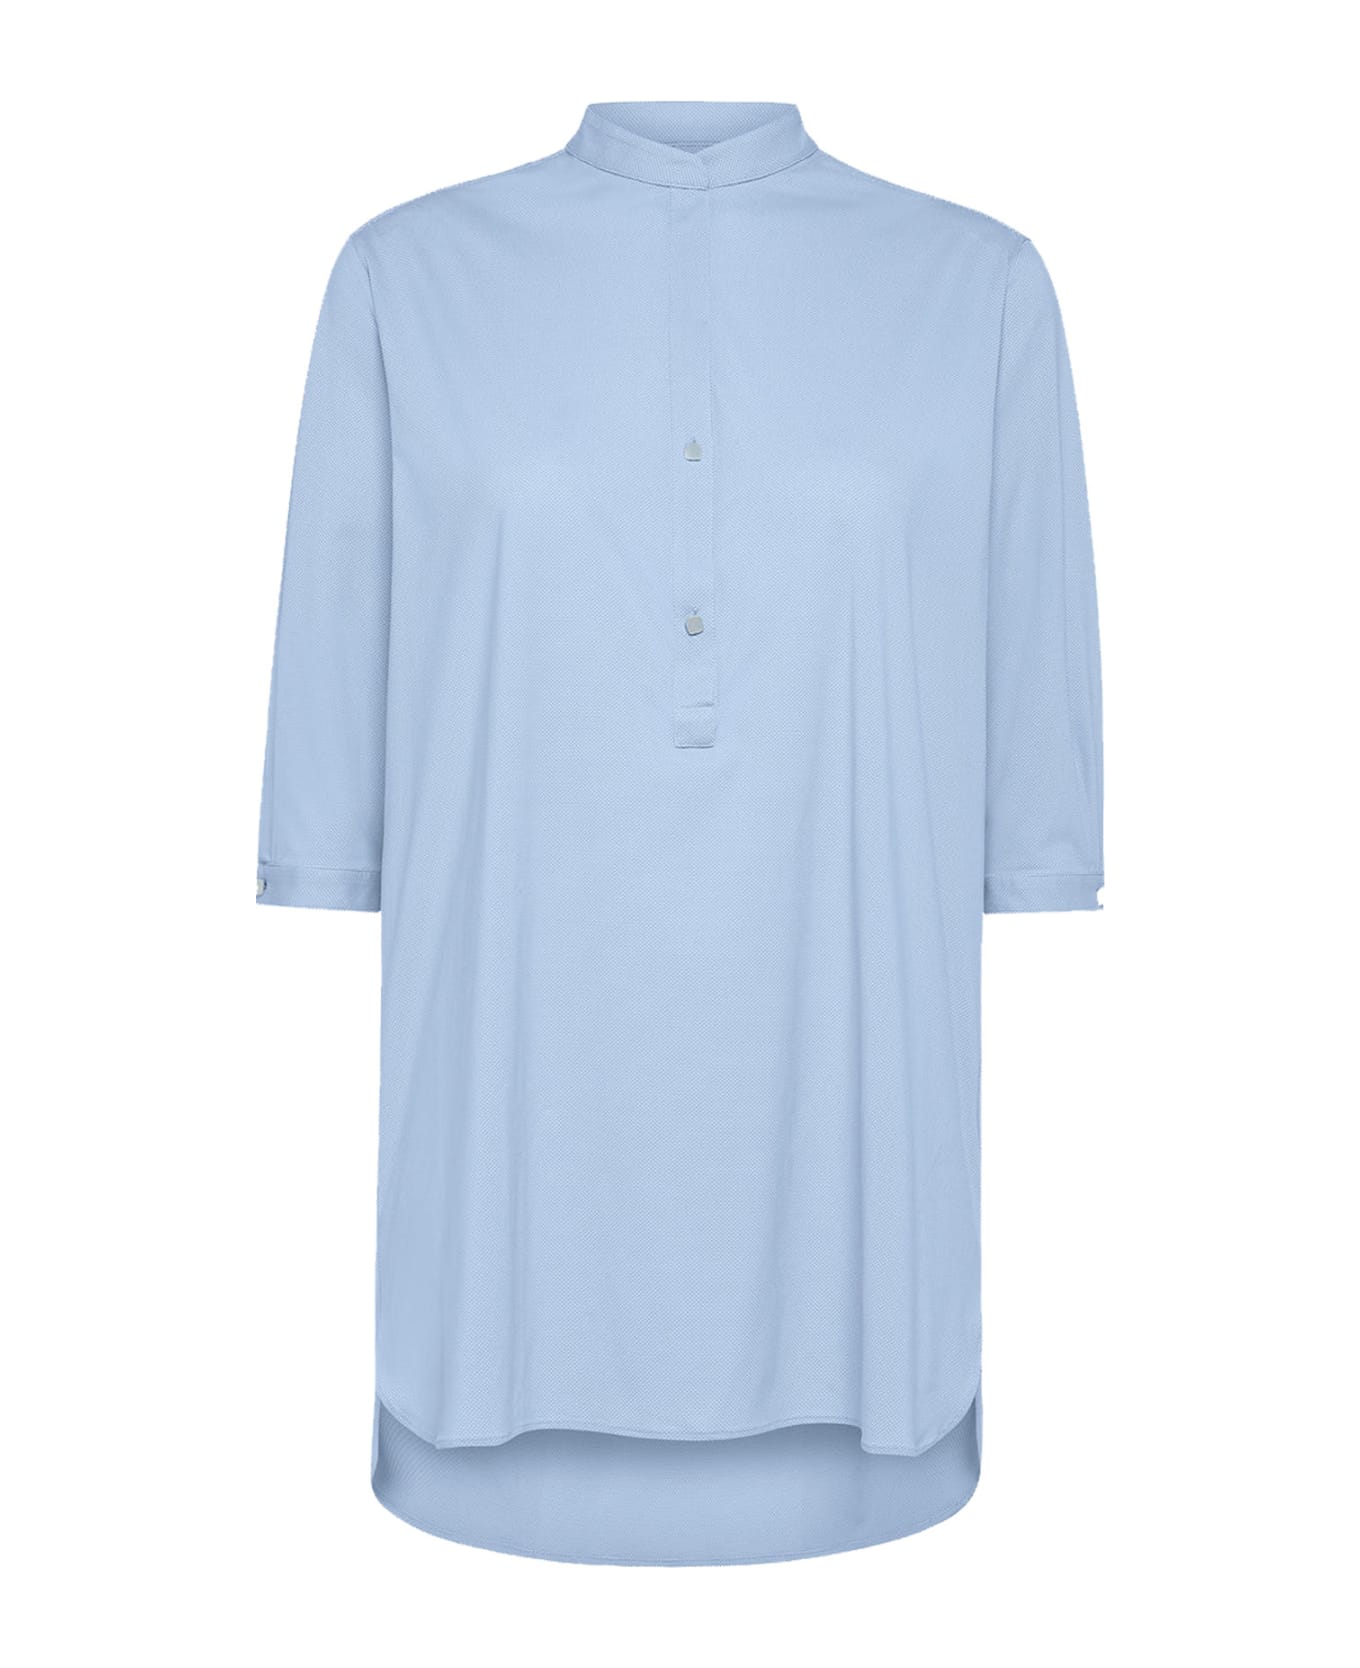 RRD - Roberto Ricci Design Shirt - Clear Blue シャツ